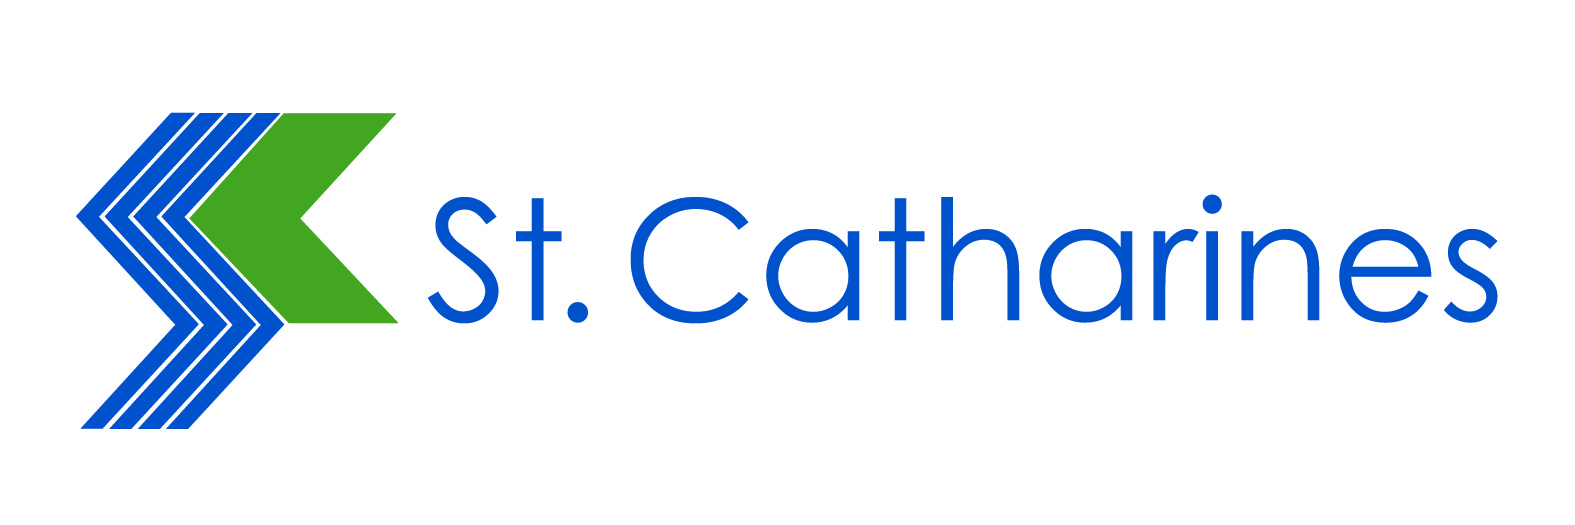 City of St. Catharines Logo